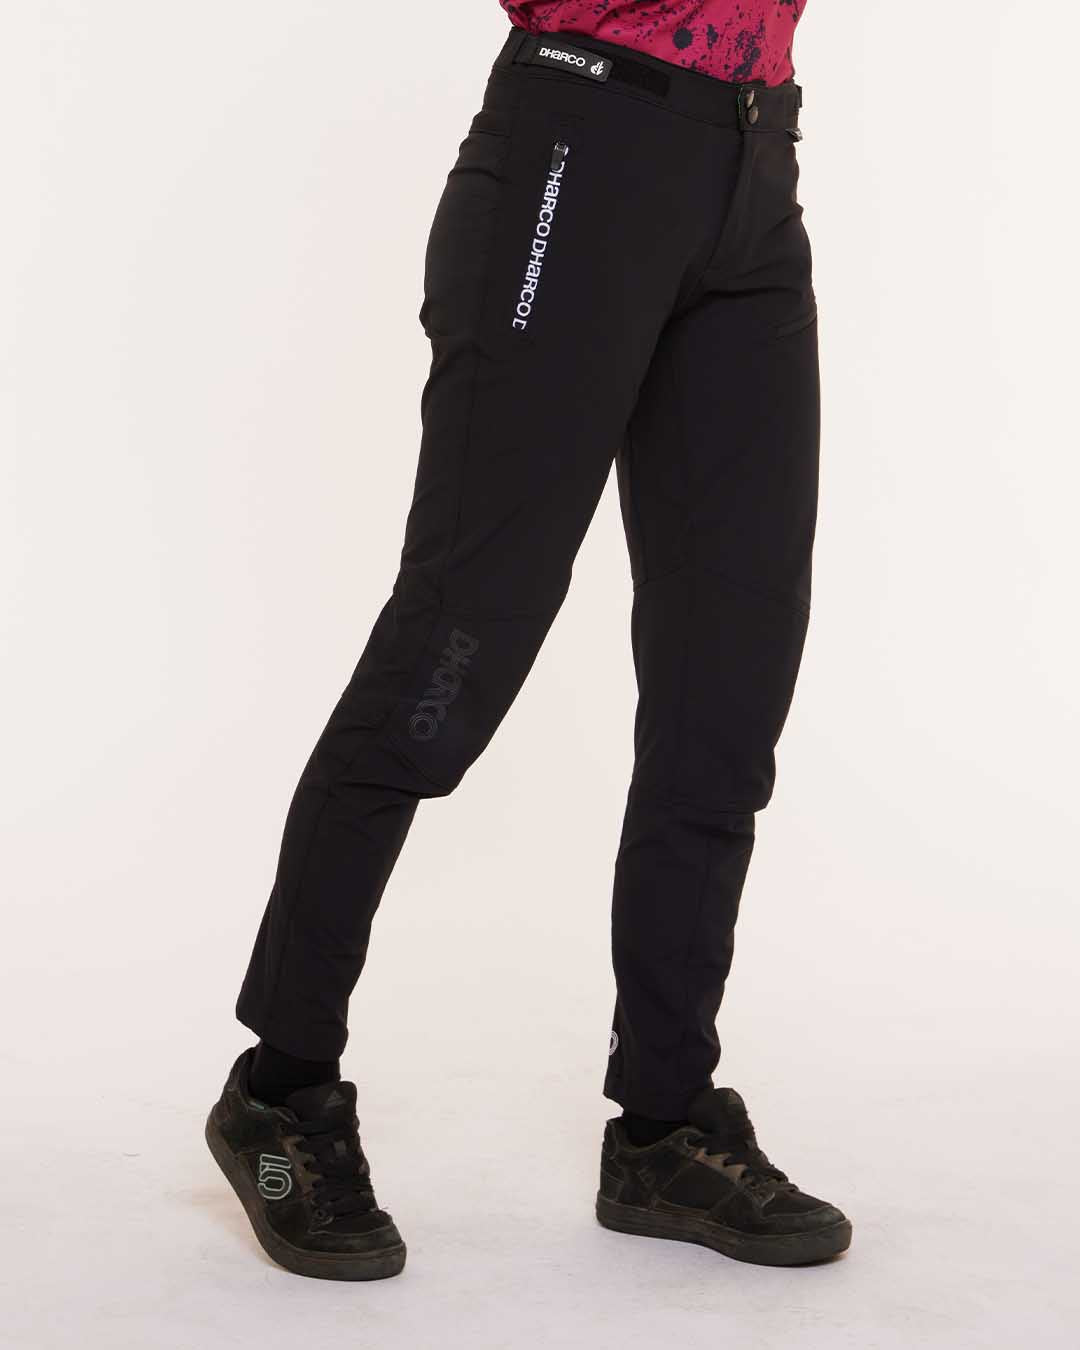 Dharco Women's Gravity Leopard Pants Black/Beige